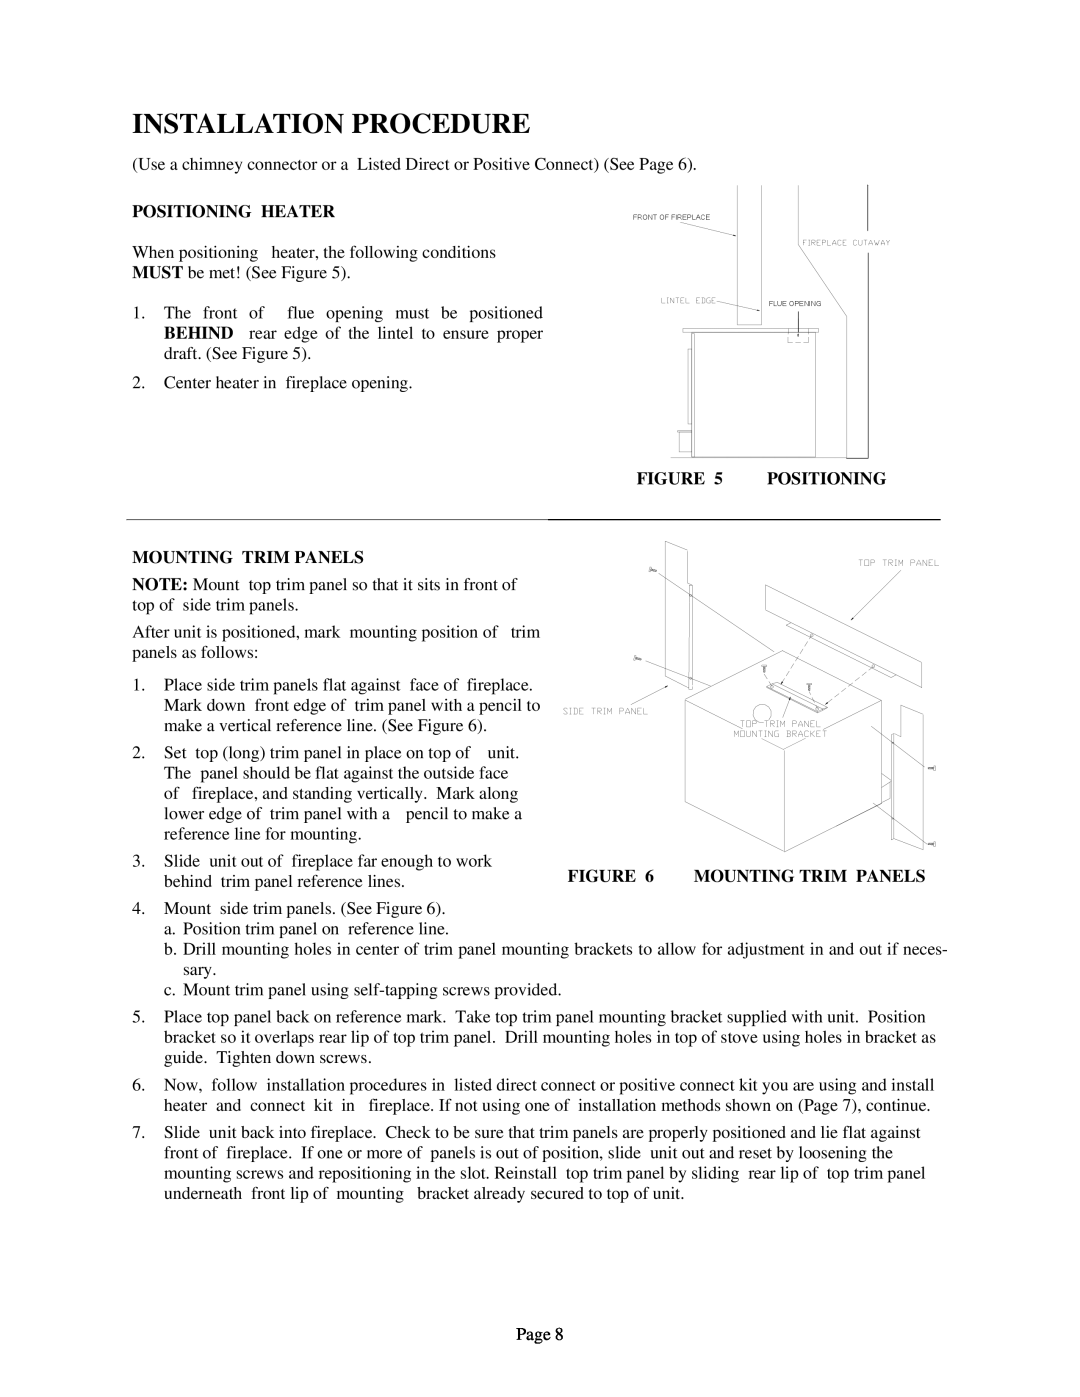 New Buck Corporation 94NC Installation Procedure, Positioning Heater, Behind, Mounting Trim Panels 